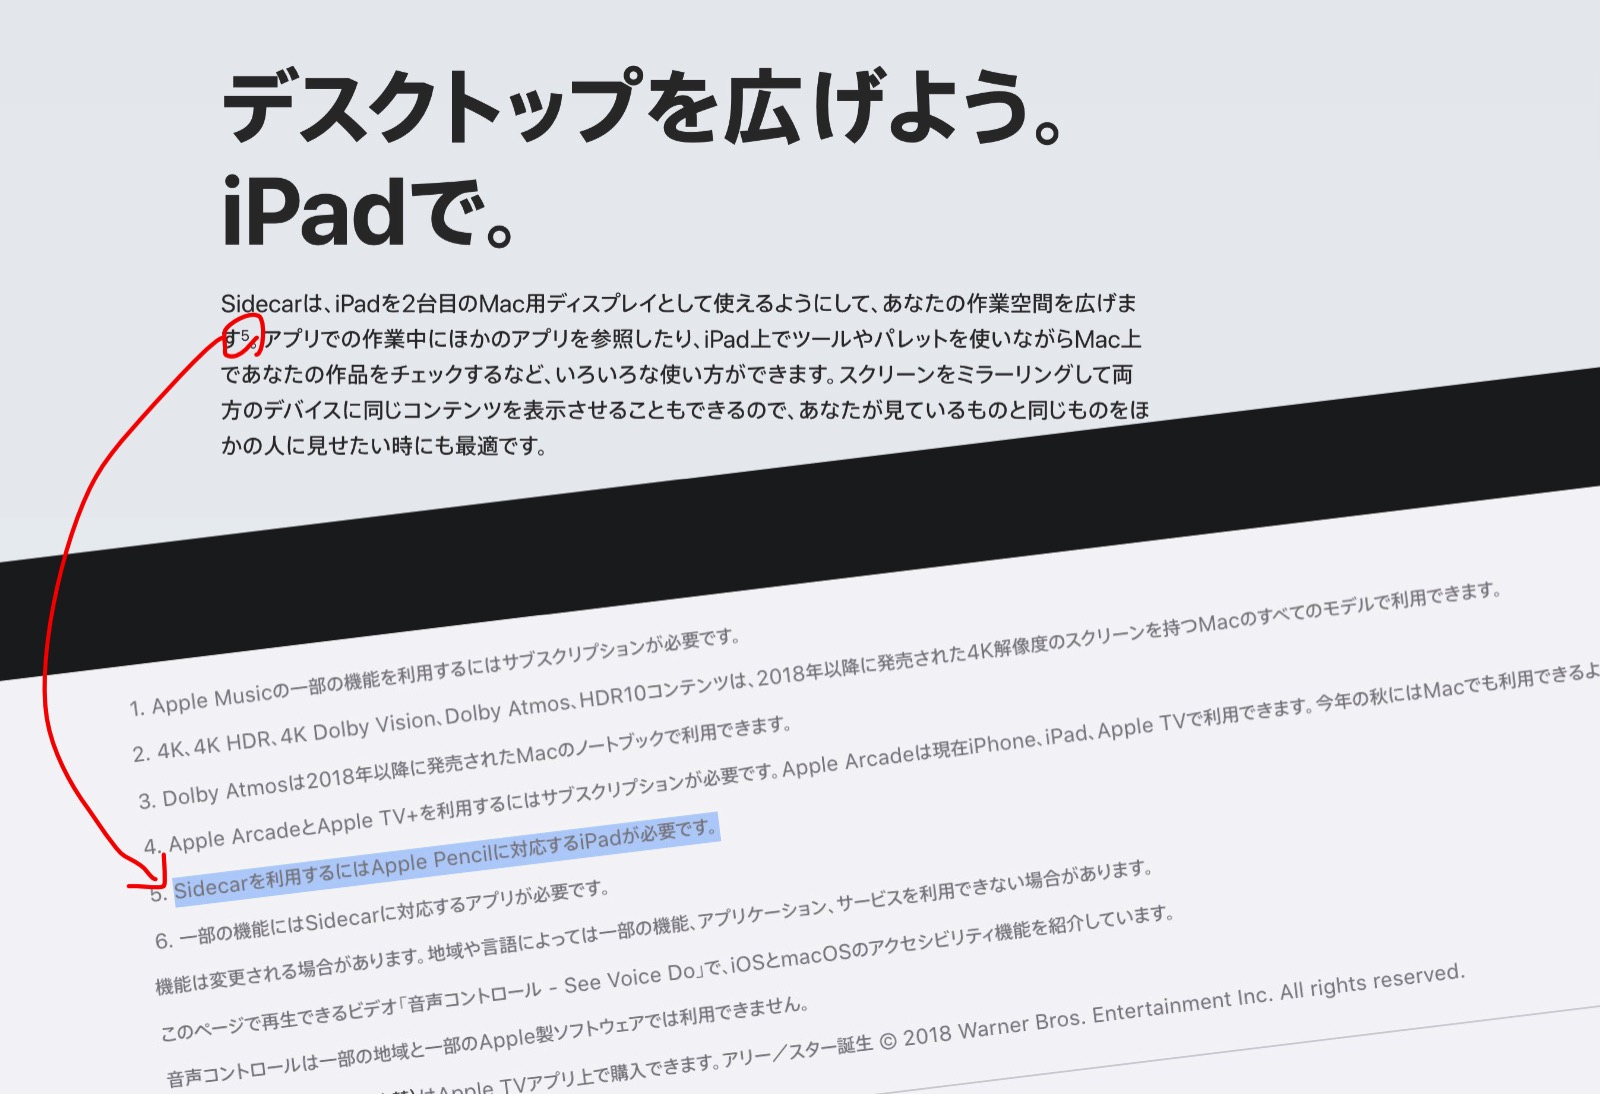 Sidecar-needs-an-apple-pencil-supported-ipad.jpg